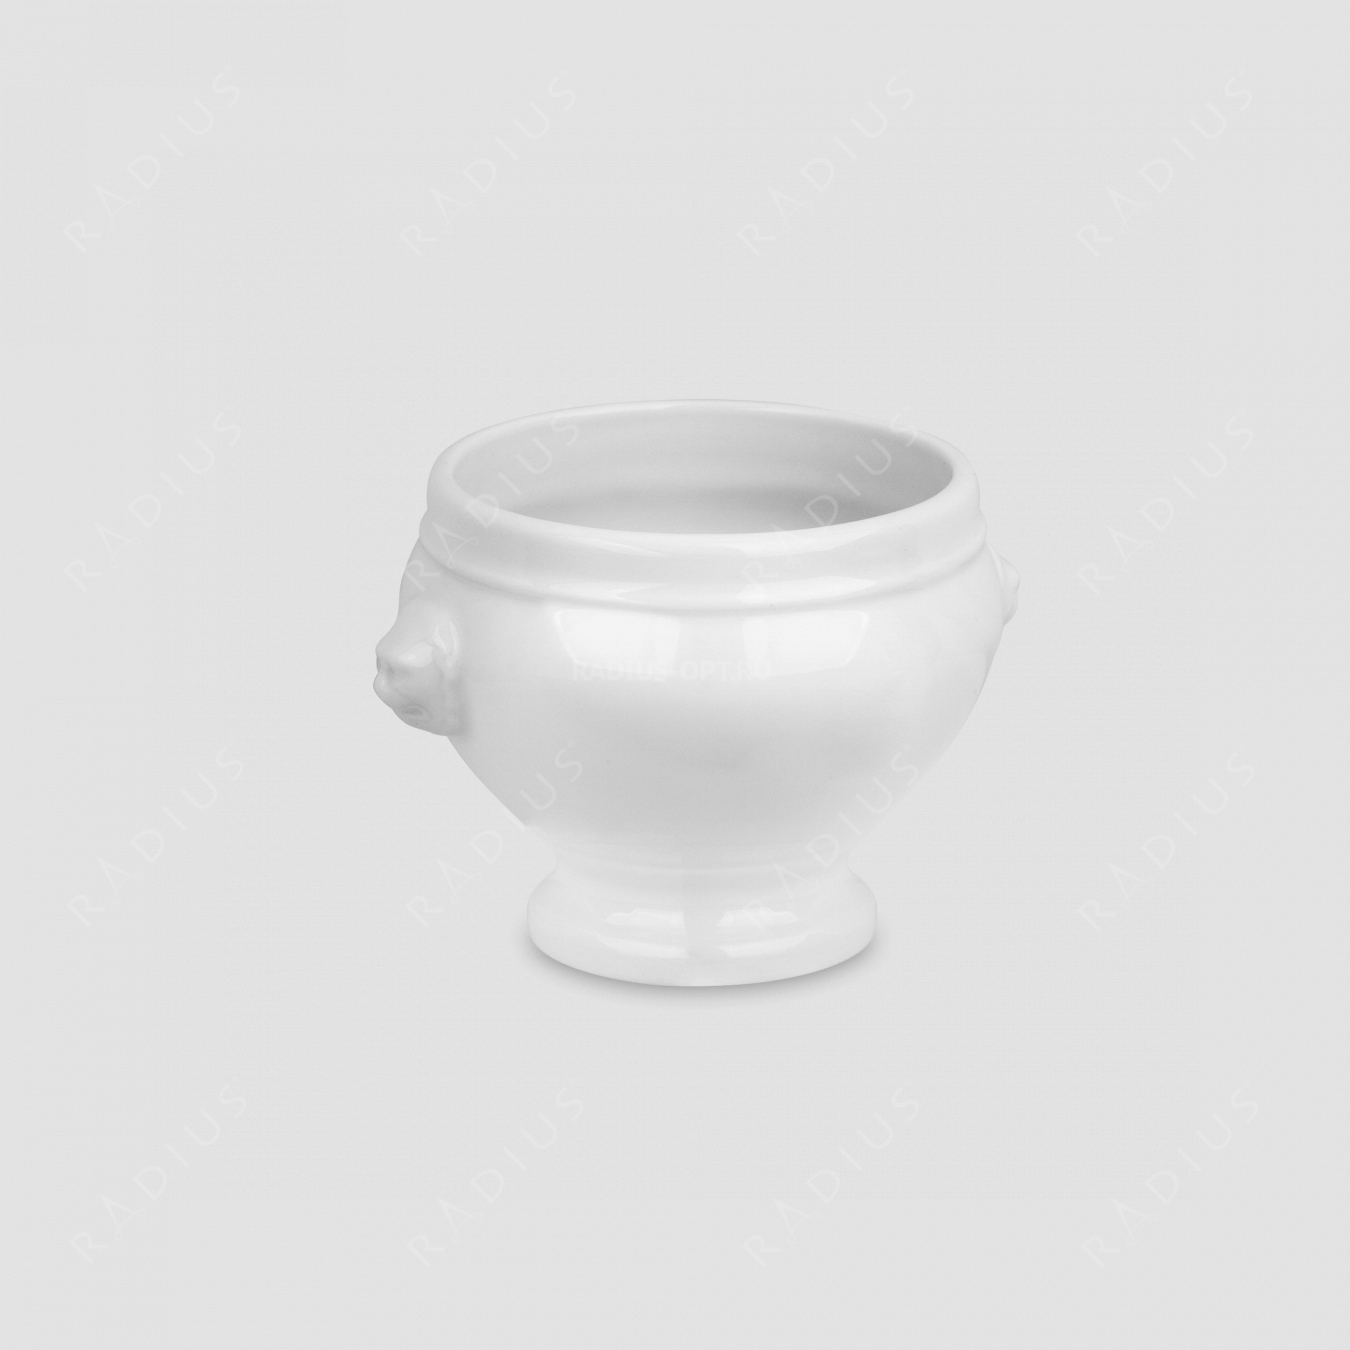 Чашка для супа, 180 мл, фарфор, белый, серия Generale, PILLIVUYT, Франция